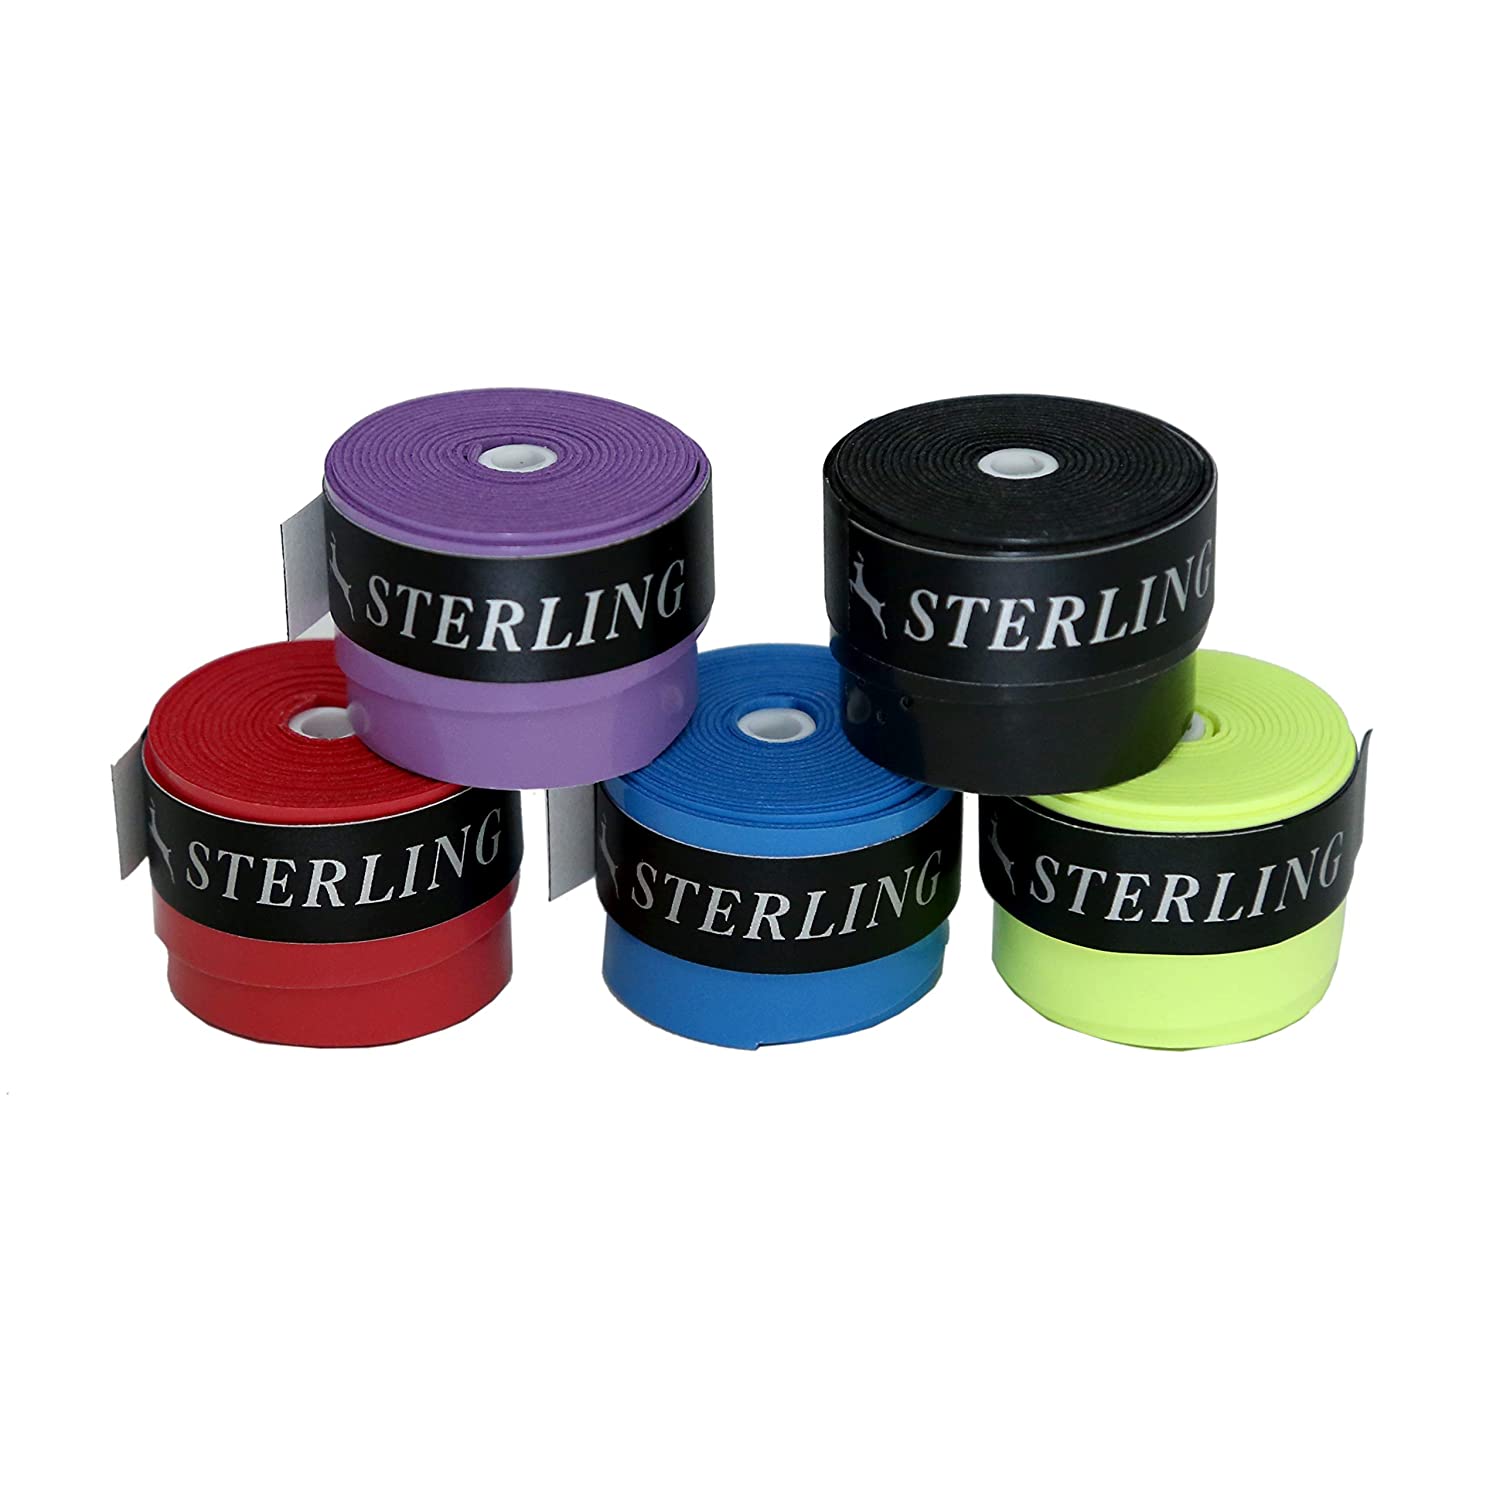 Sterling Super Smooth Super Tacky Badminton Racquet Grip (Multicoloured) sppartos